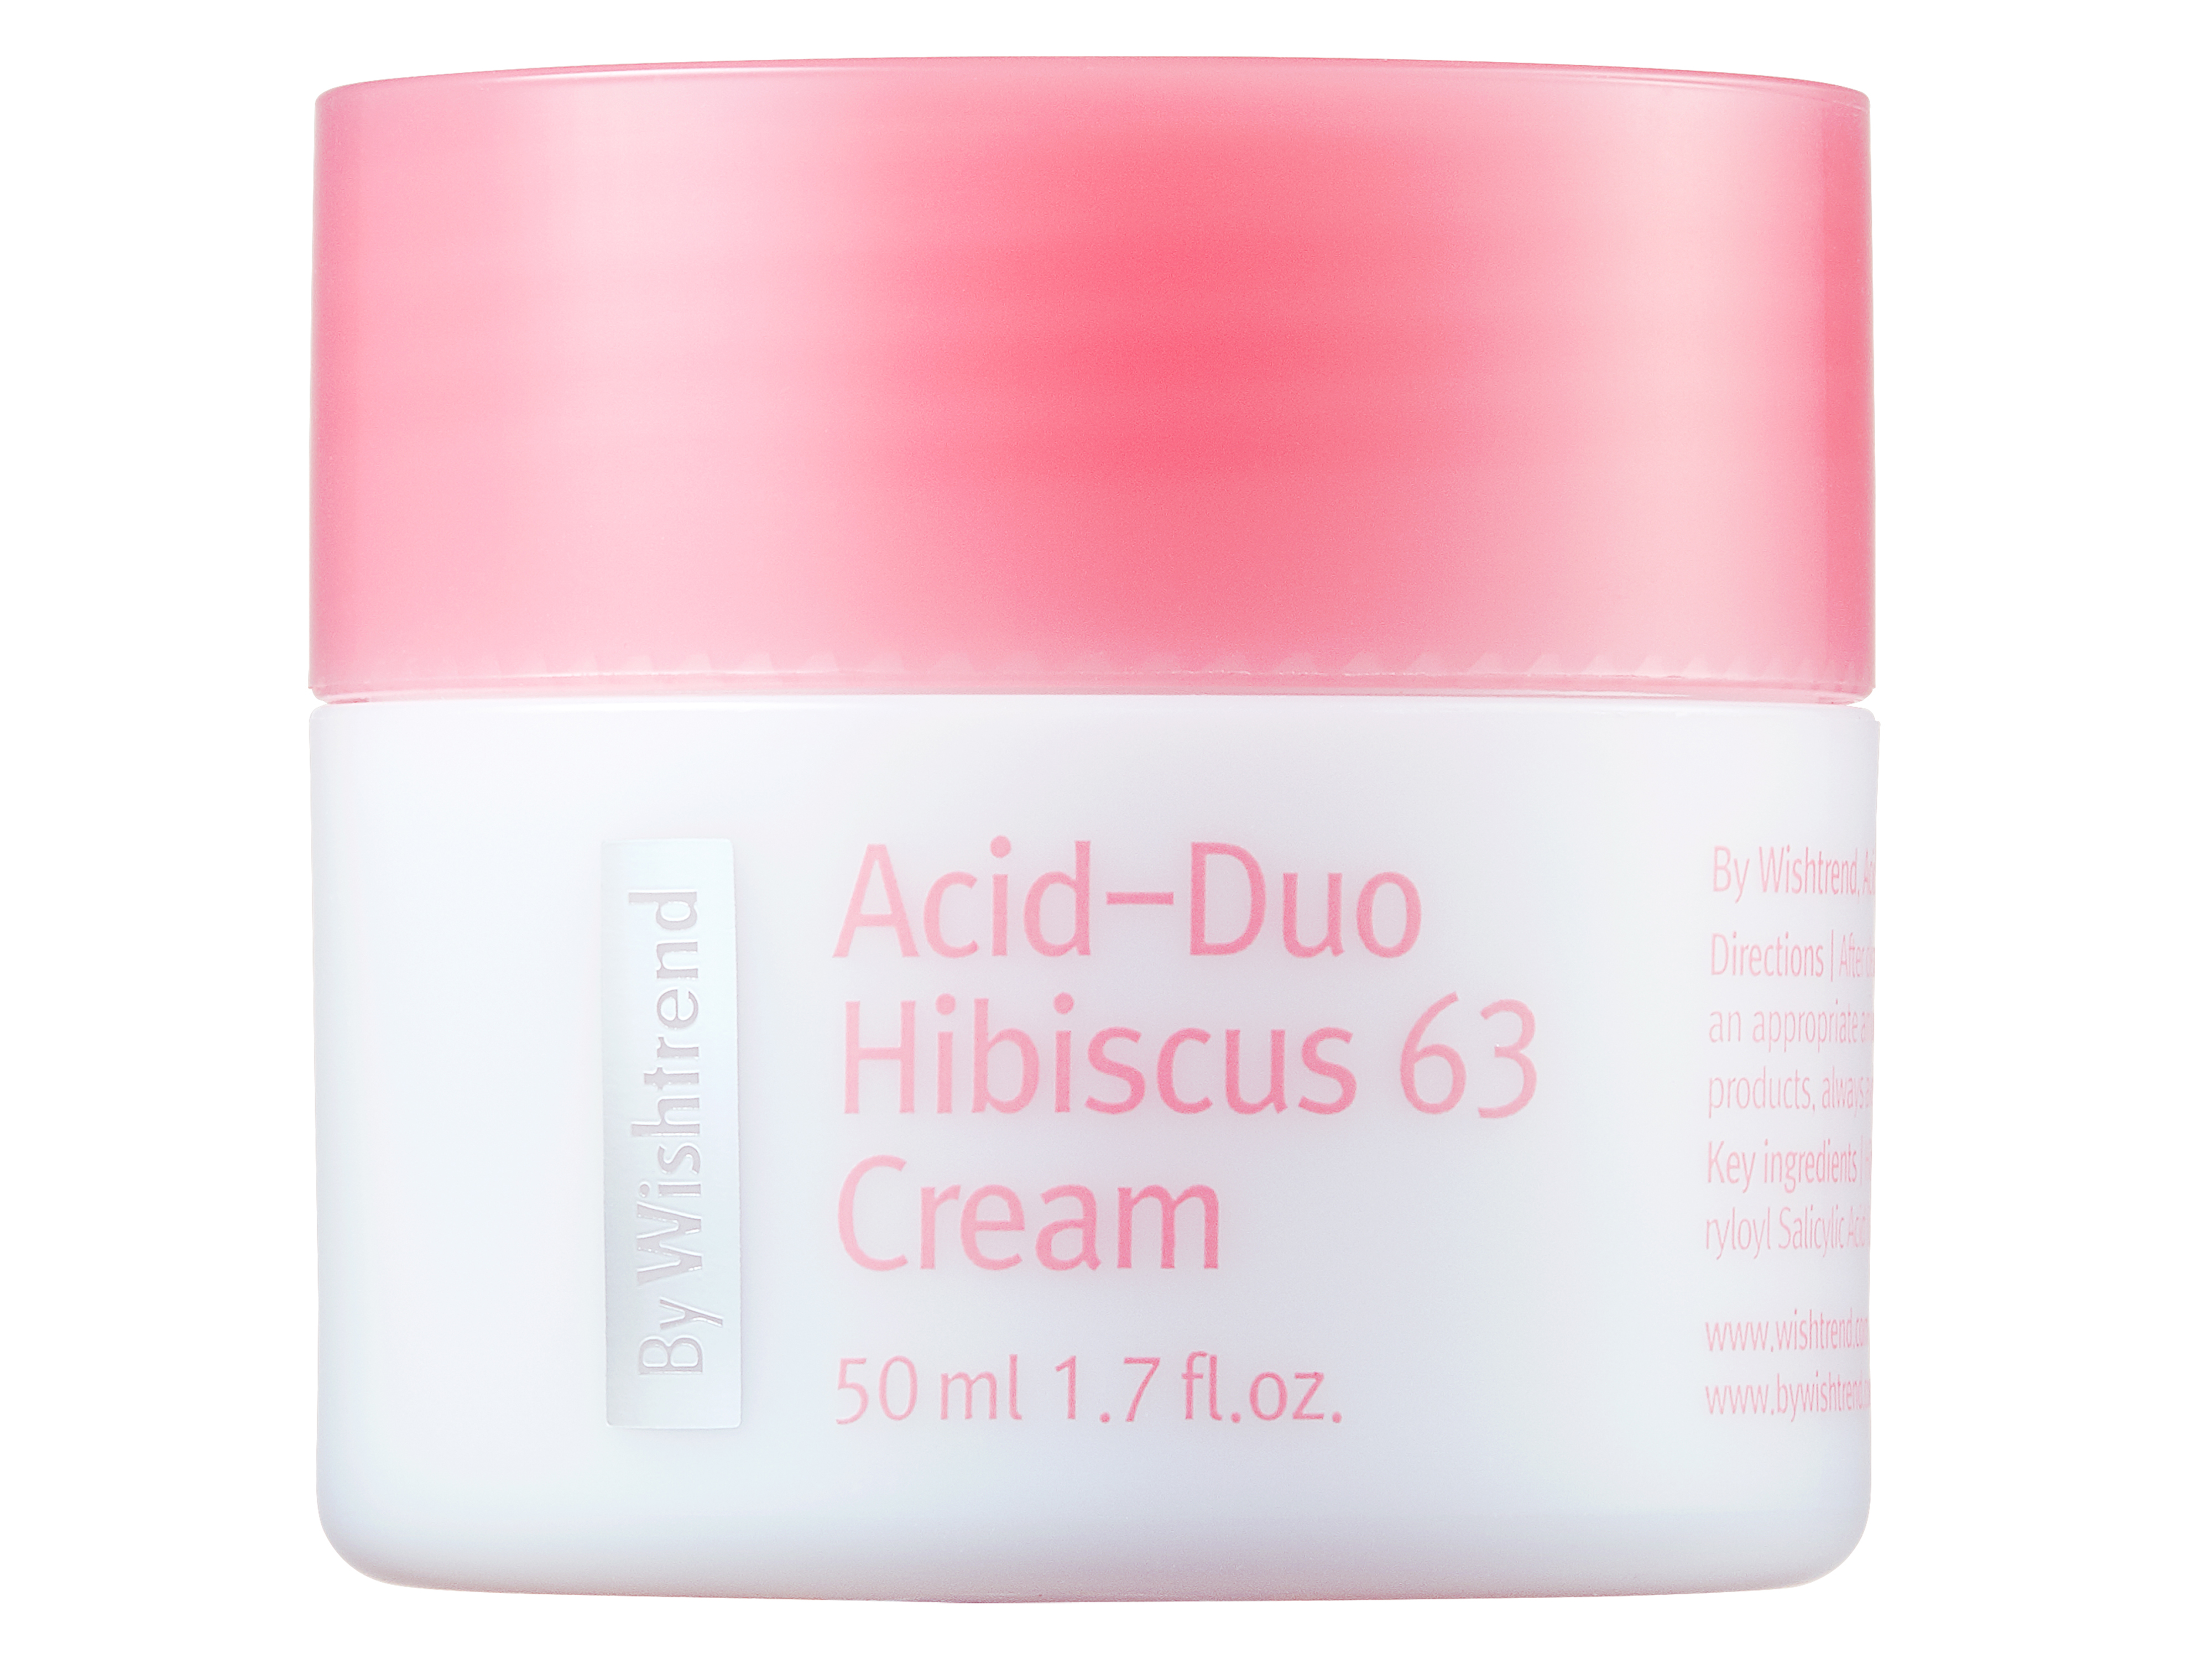 By Wishtrend Acid-Duo Hibiscus 63 Cream, 50 ml